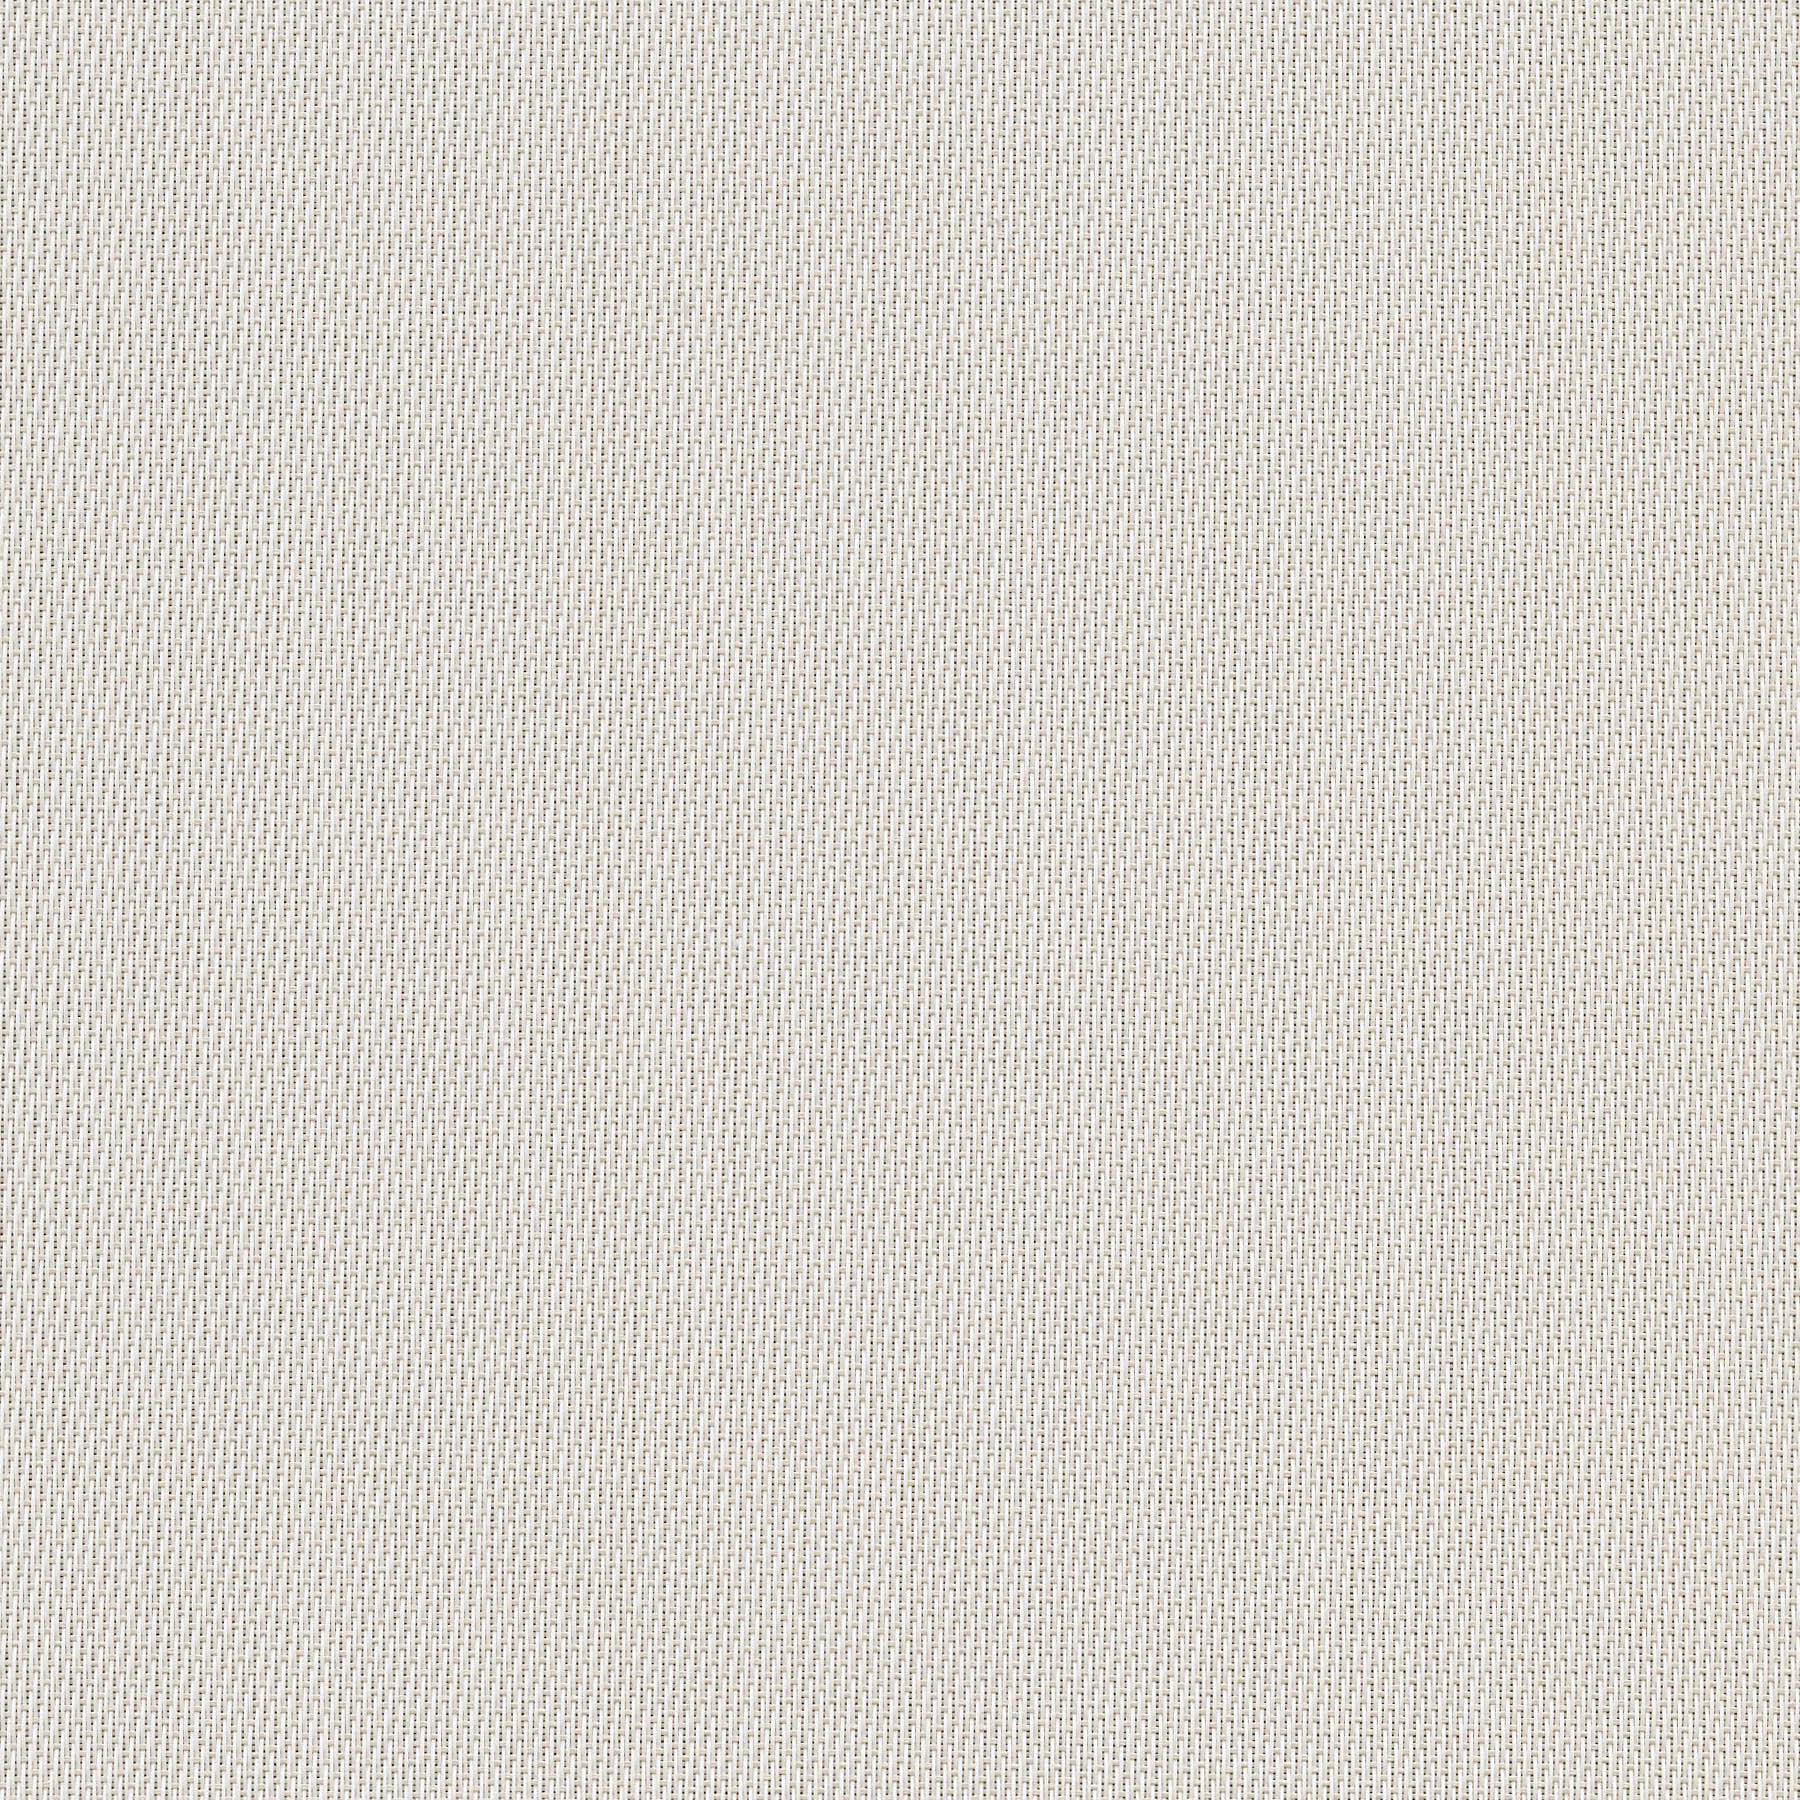 Altex - Fabric - SHEERWEAVE 2703 - Beige/White - 162